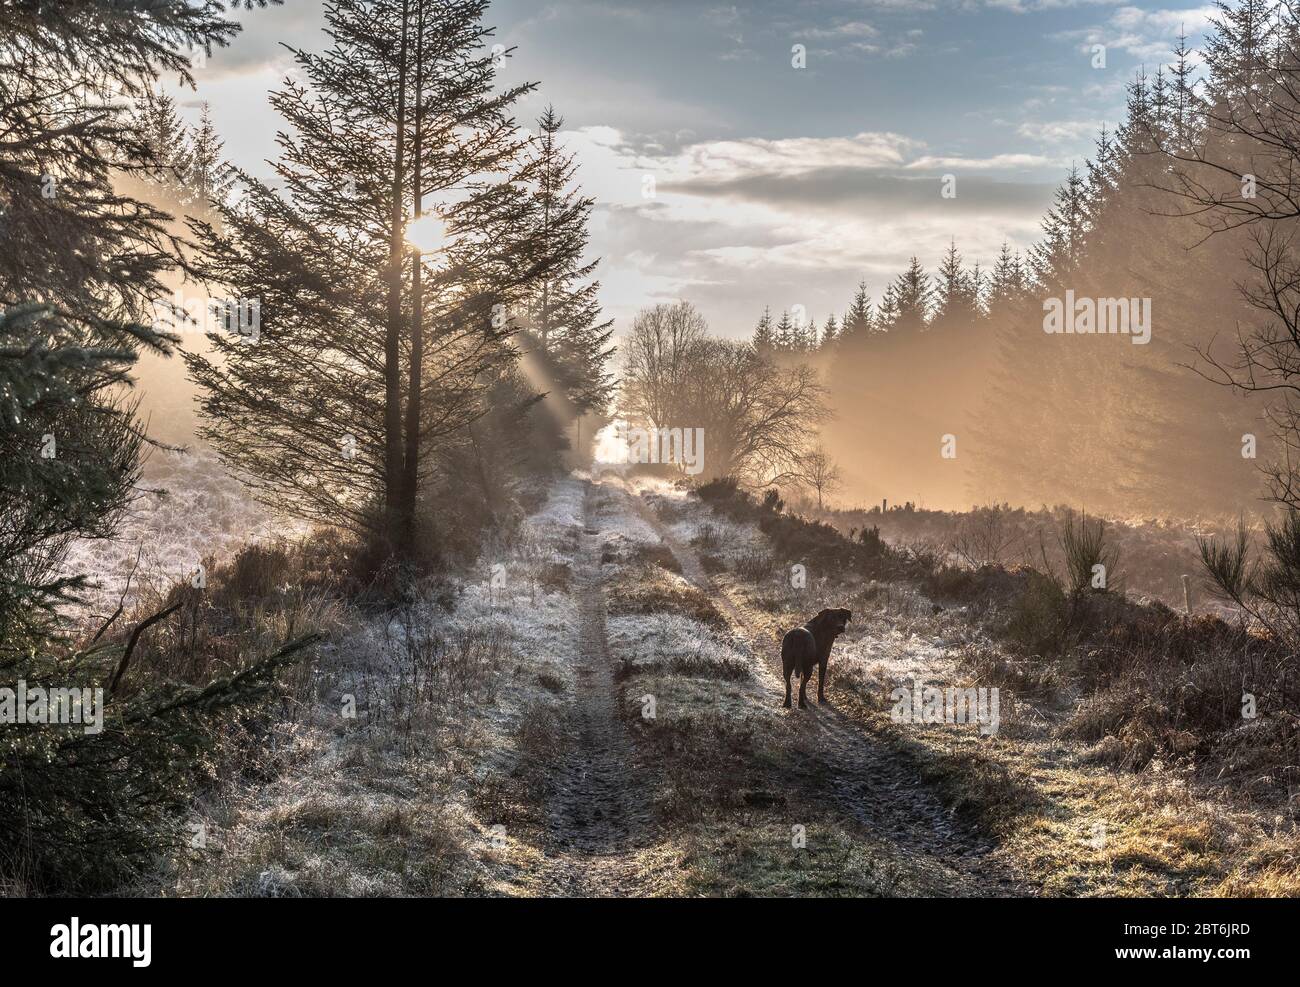 Dog walking on Mossdale former railway track in deep winter sunshine Stock Photo